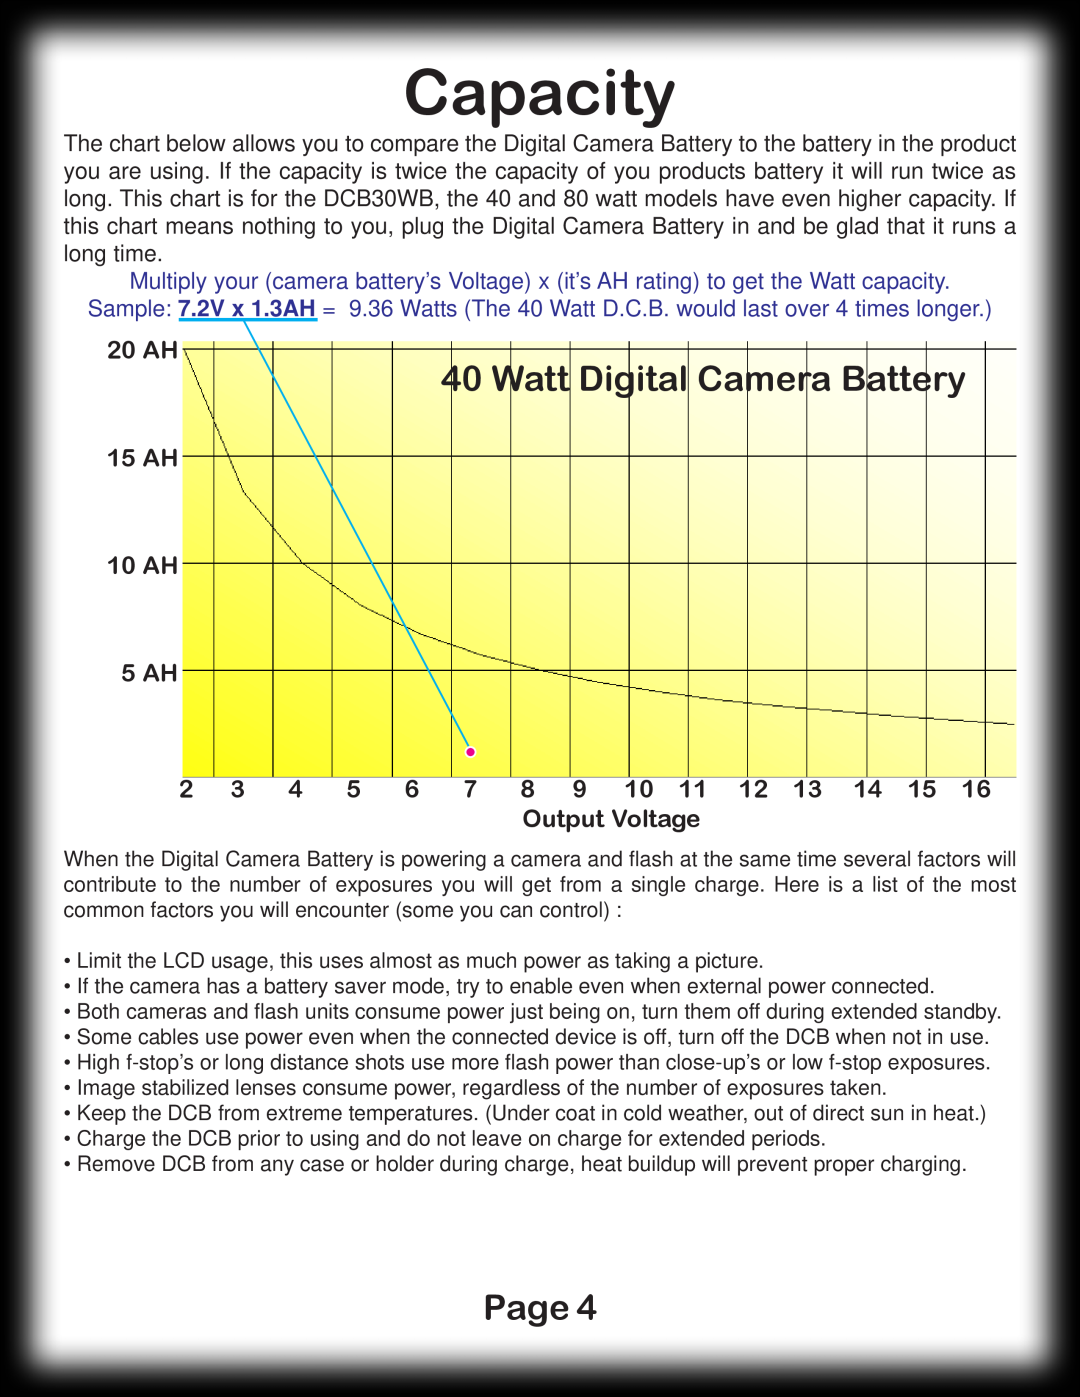 Digital Camera Battery DCB80WB manual Capacity, 20 AH, 15 AH, 10 AH, Output Voltage, Page, Watt Digital Camera Battery 